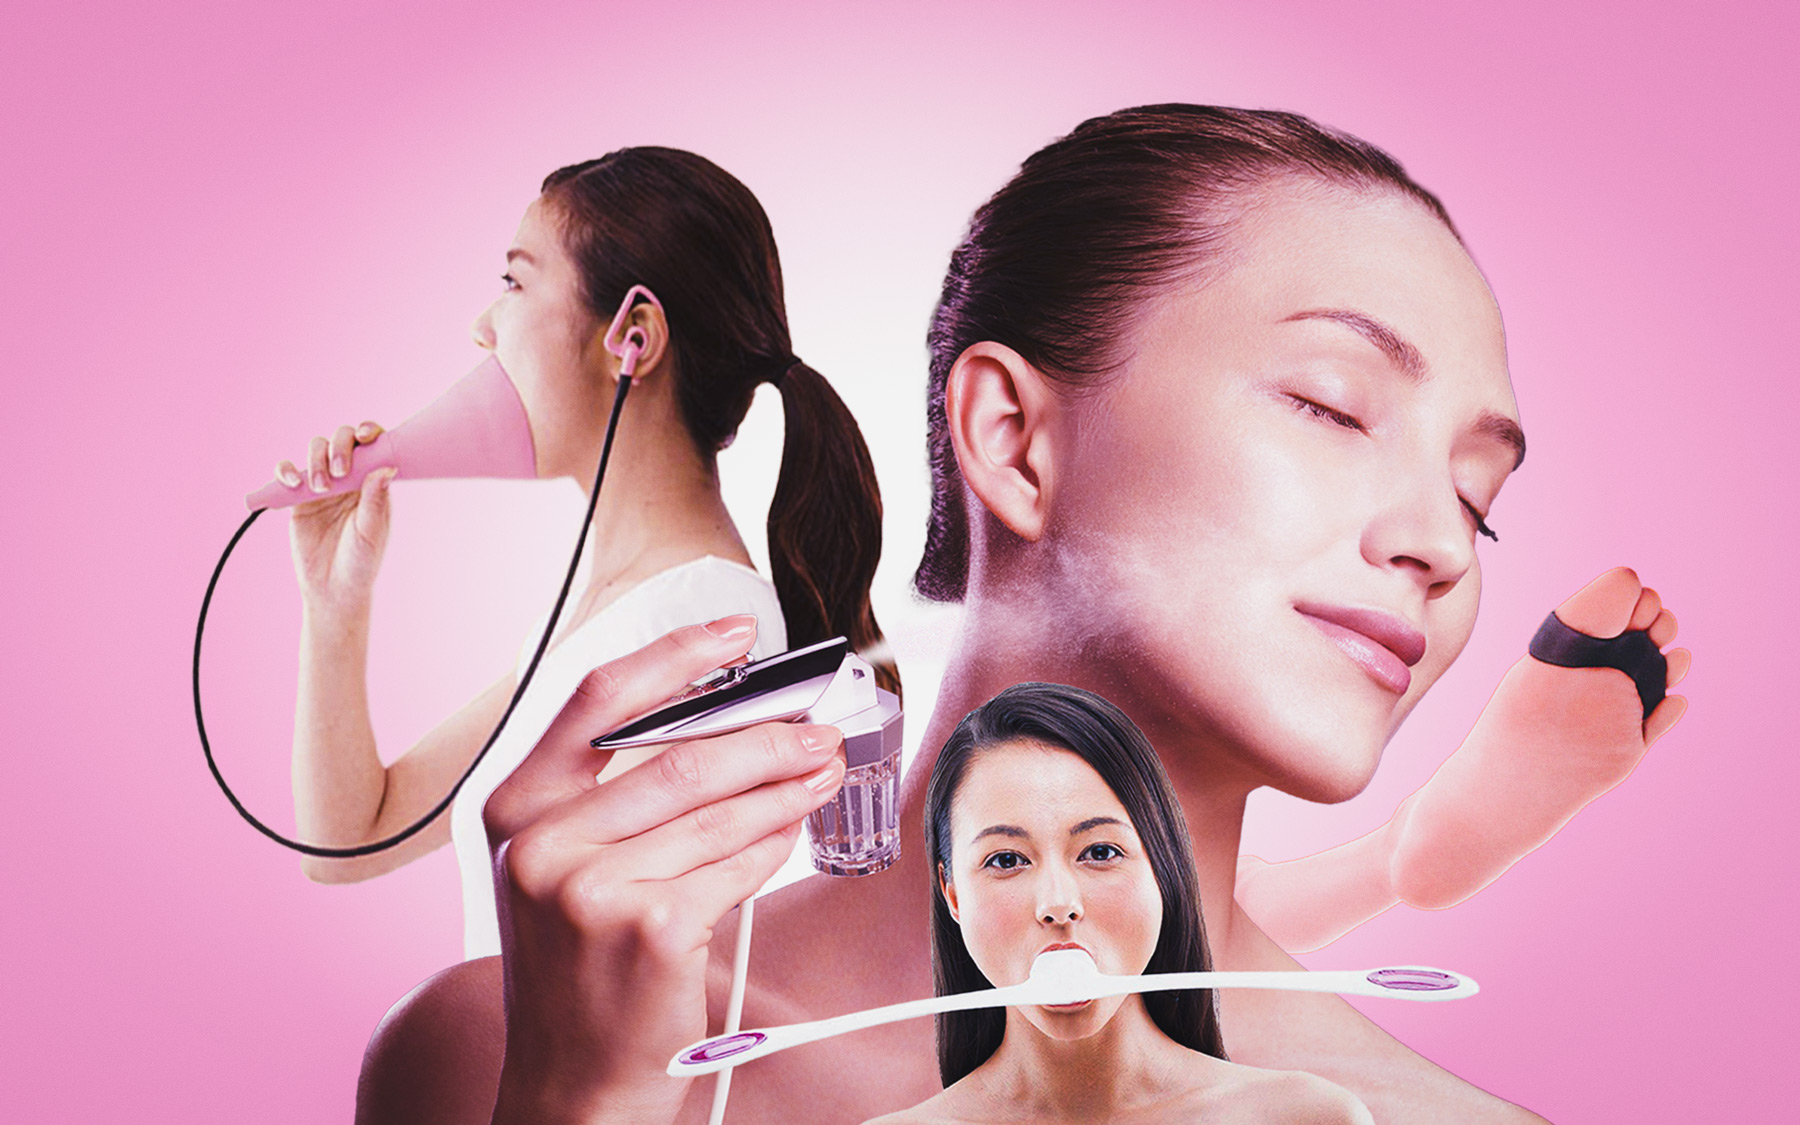 Japanese Beauty Gadgets - 16 Popular Electric Beauty Appliances -  JapanLivingGuide.net - Living Guide in Japan